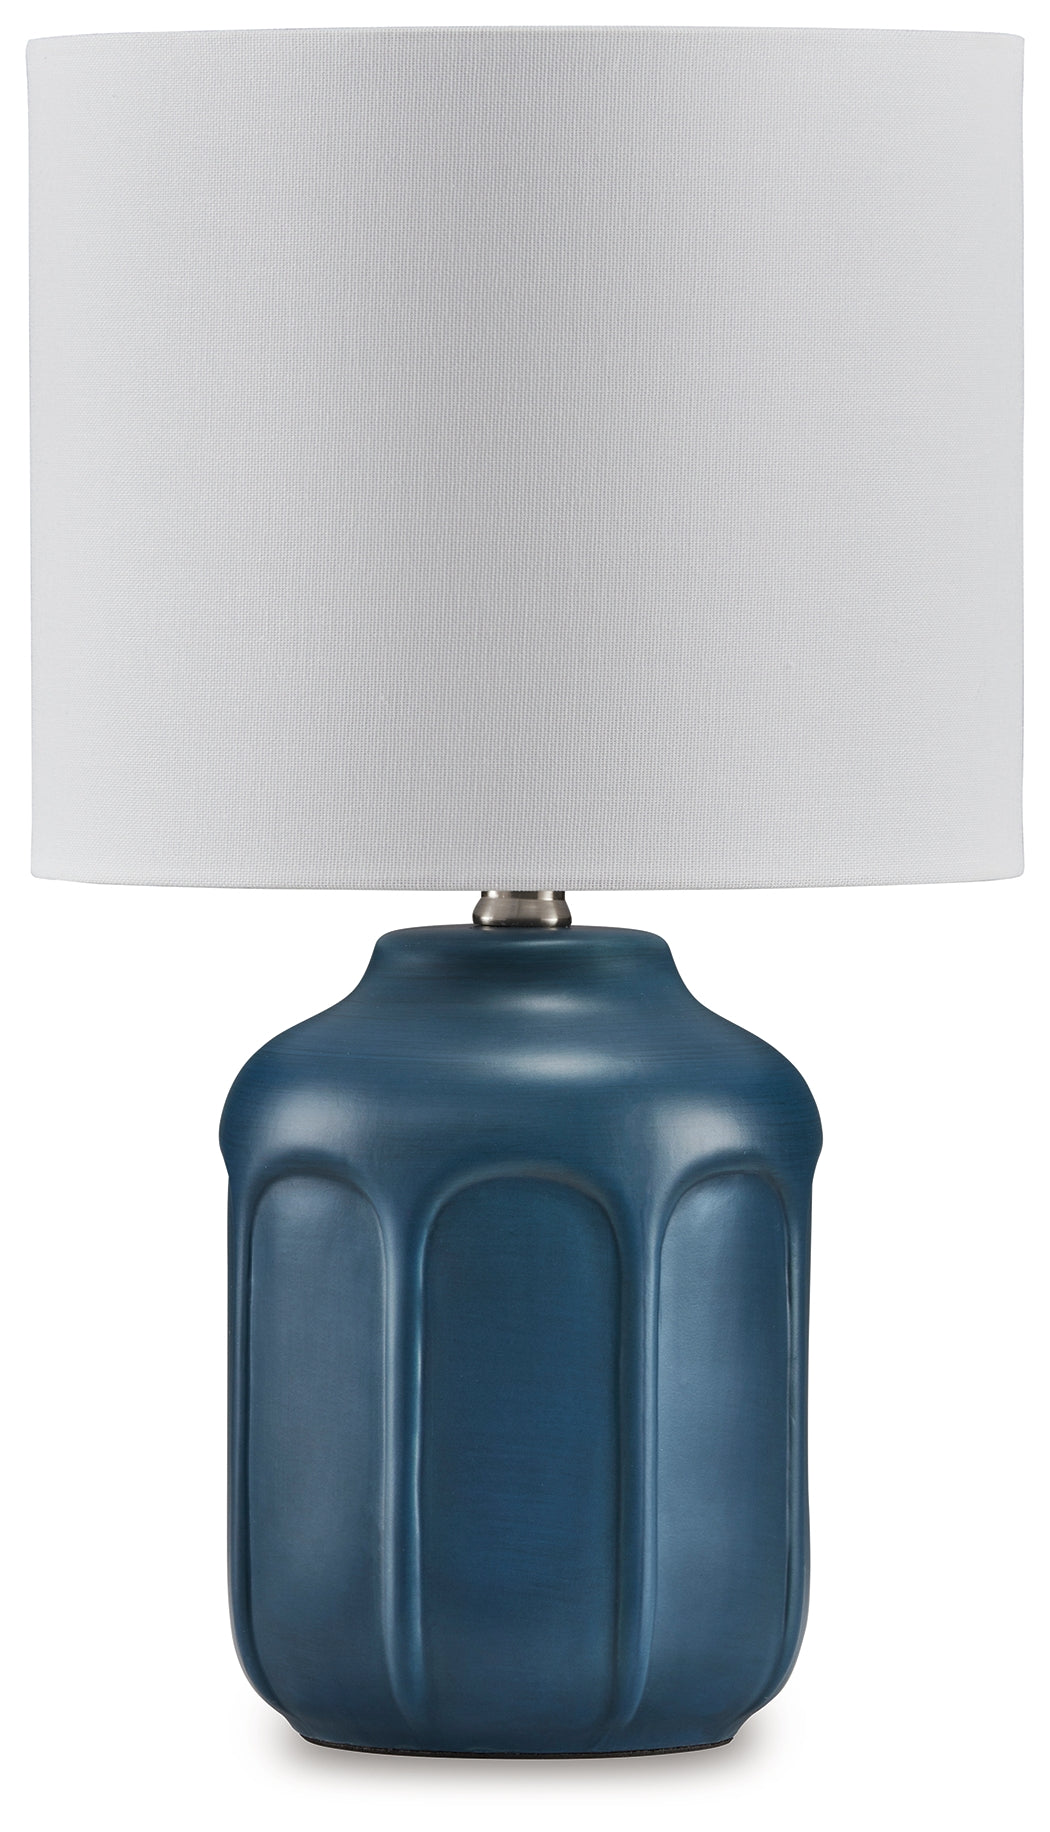 Gierburg Teal Table Lamp - L180214 - Bien Home Furniture &amp; Electronics